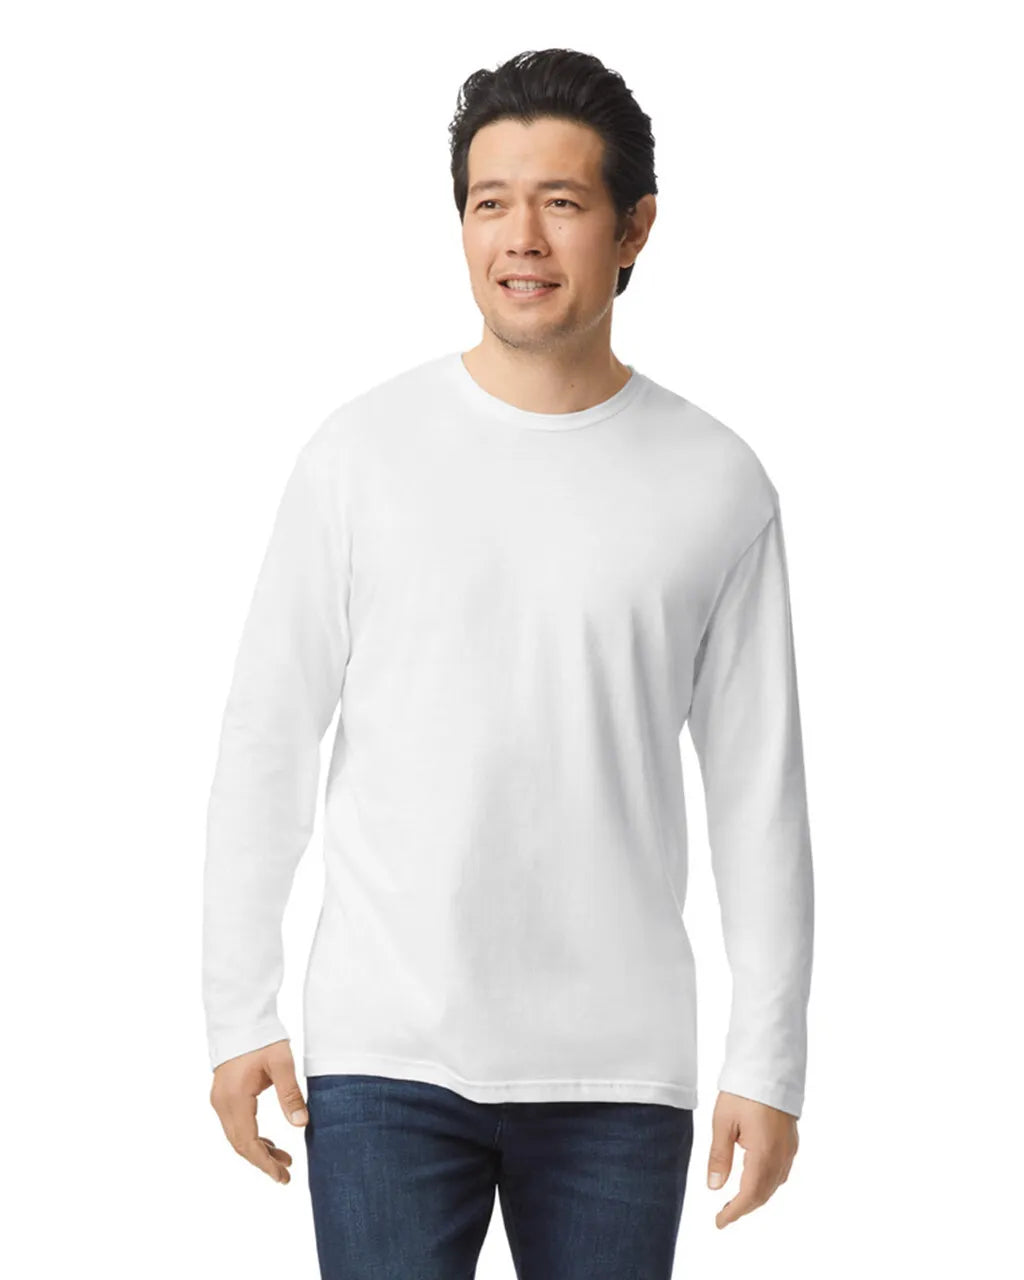 Pretreated Gildan 64400 Softstyle Unisex Long Sleeve T-Shirt